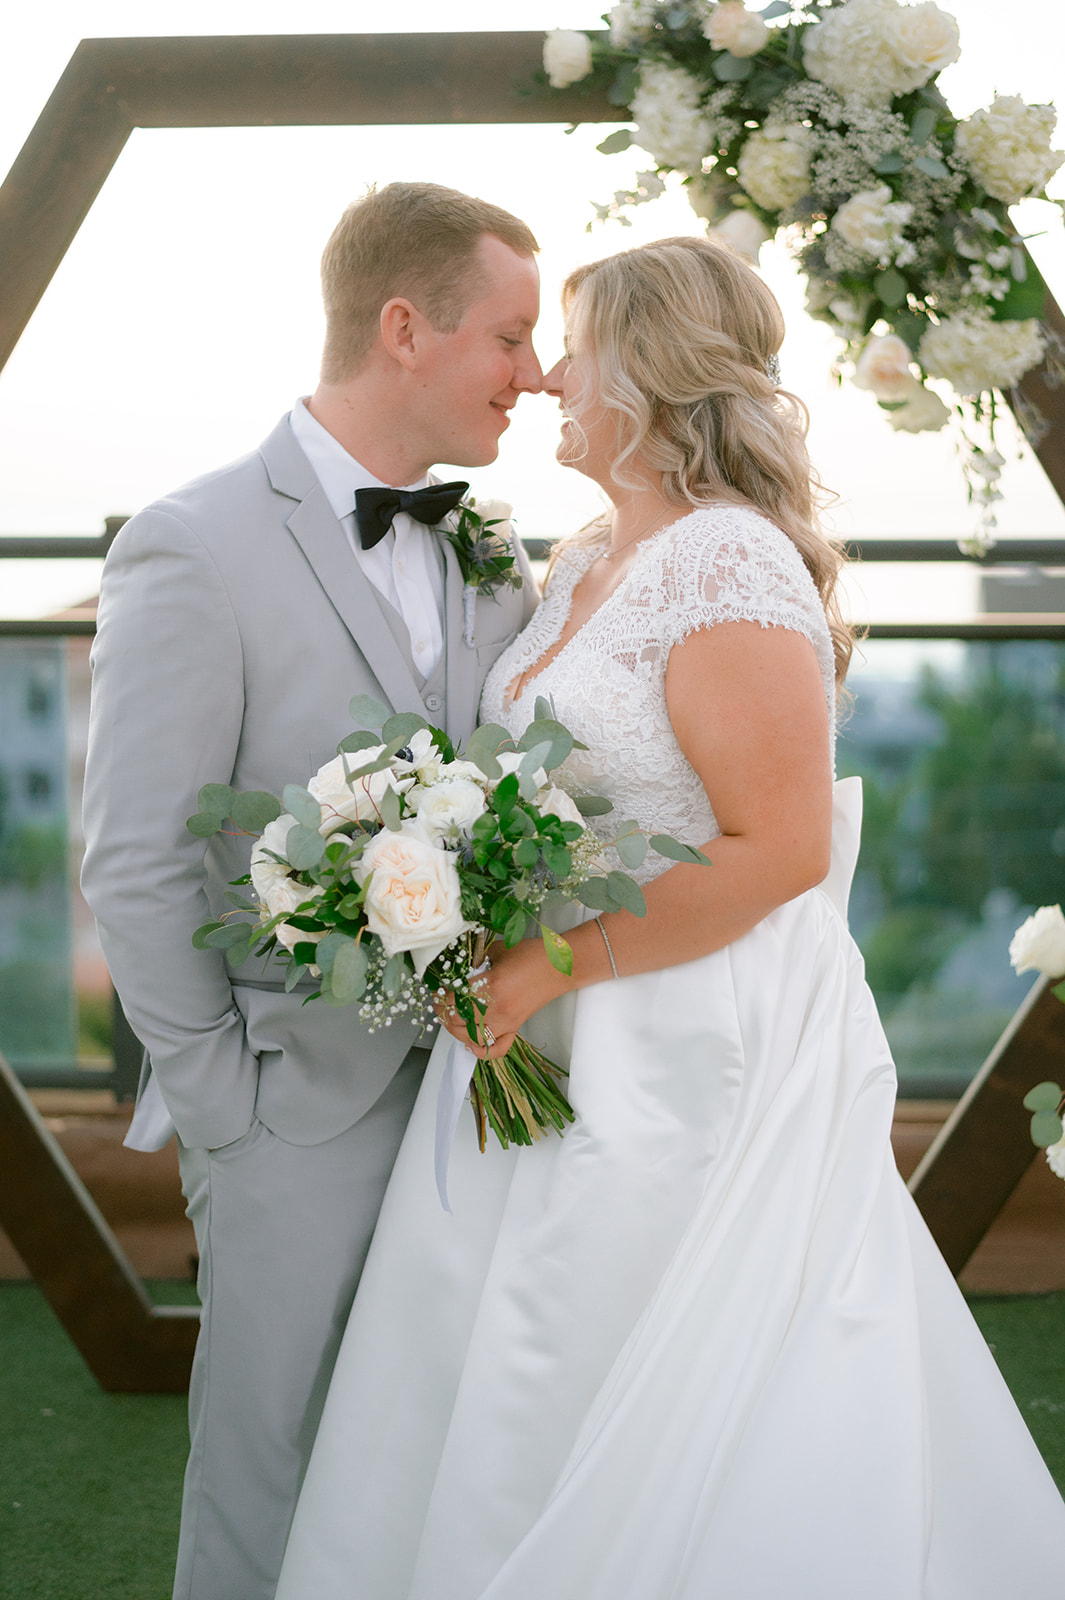 Hotel Zamora Wedding Ceremony: Bride and Groom's Heartfelt Vows
